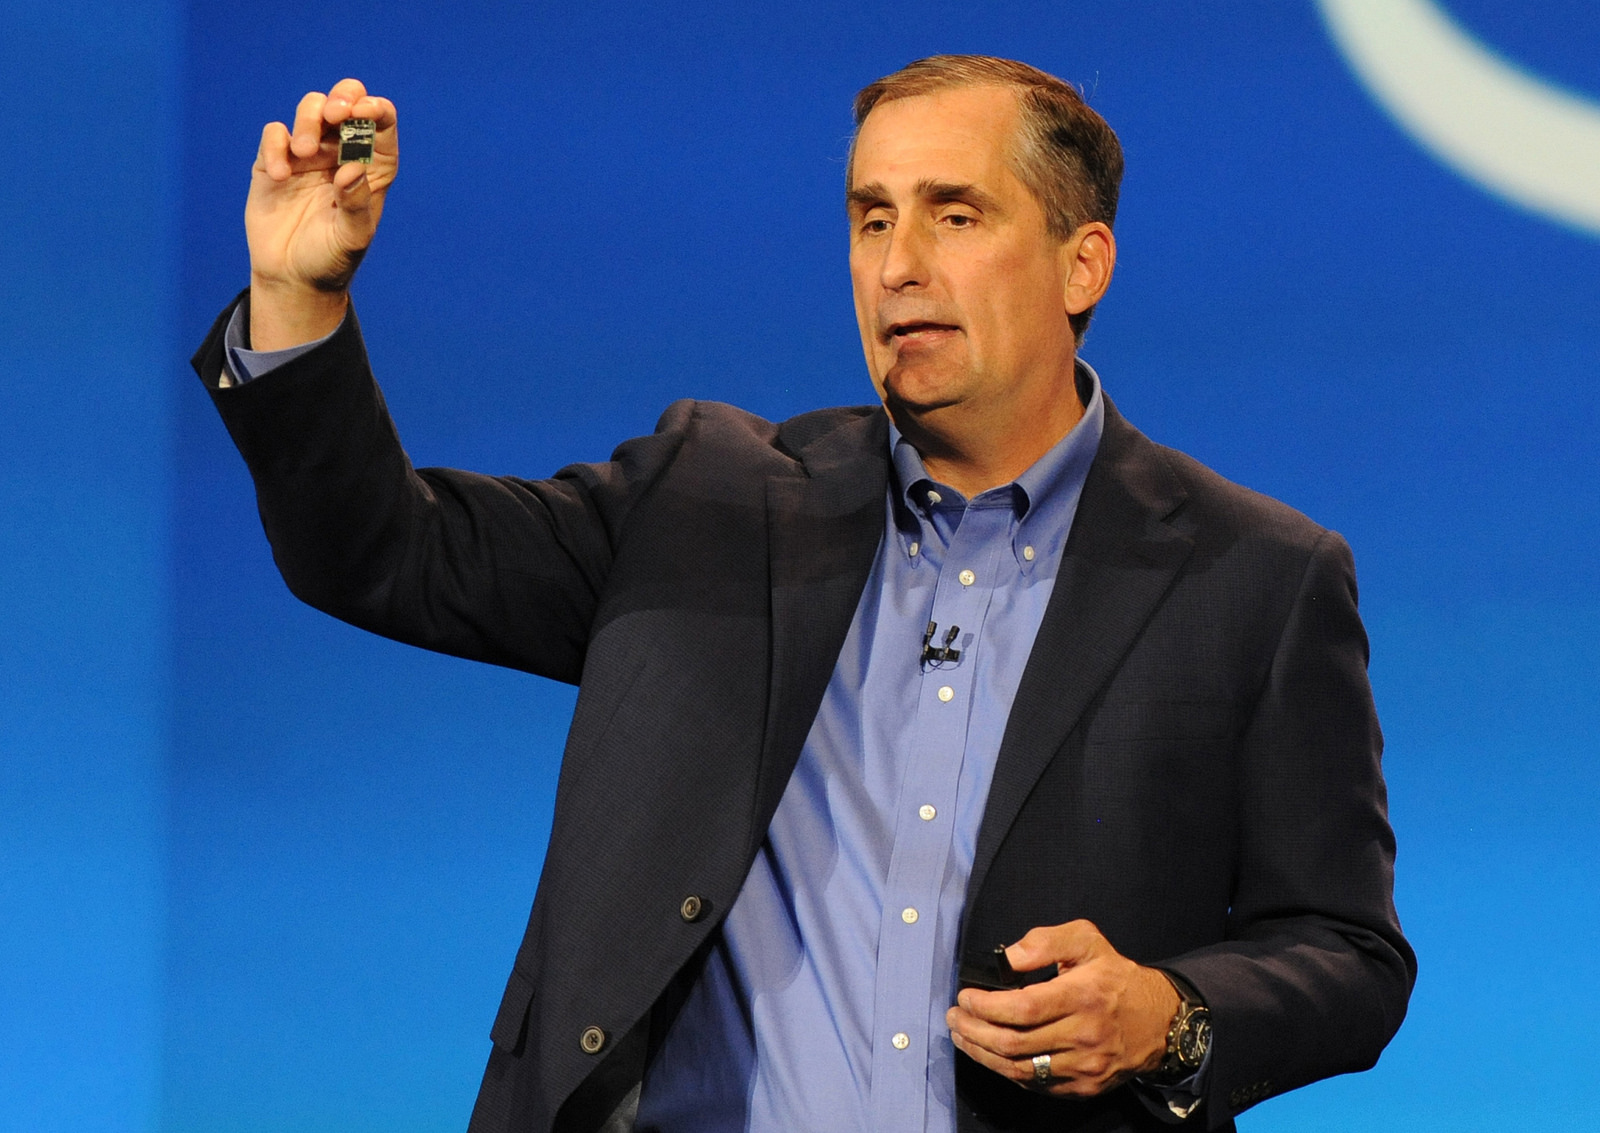 Intel's new CEO, Brian Krzanich